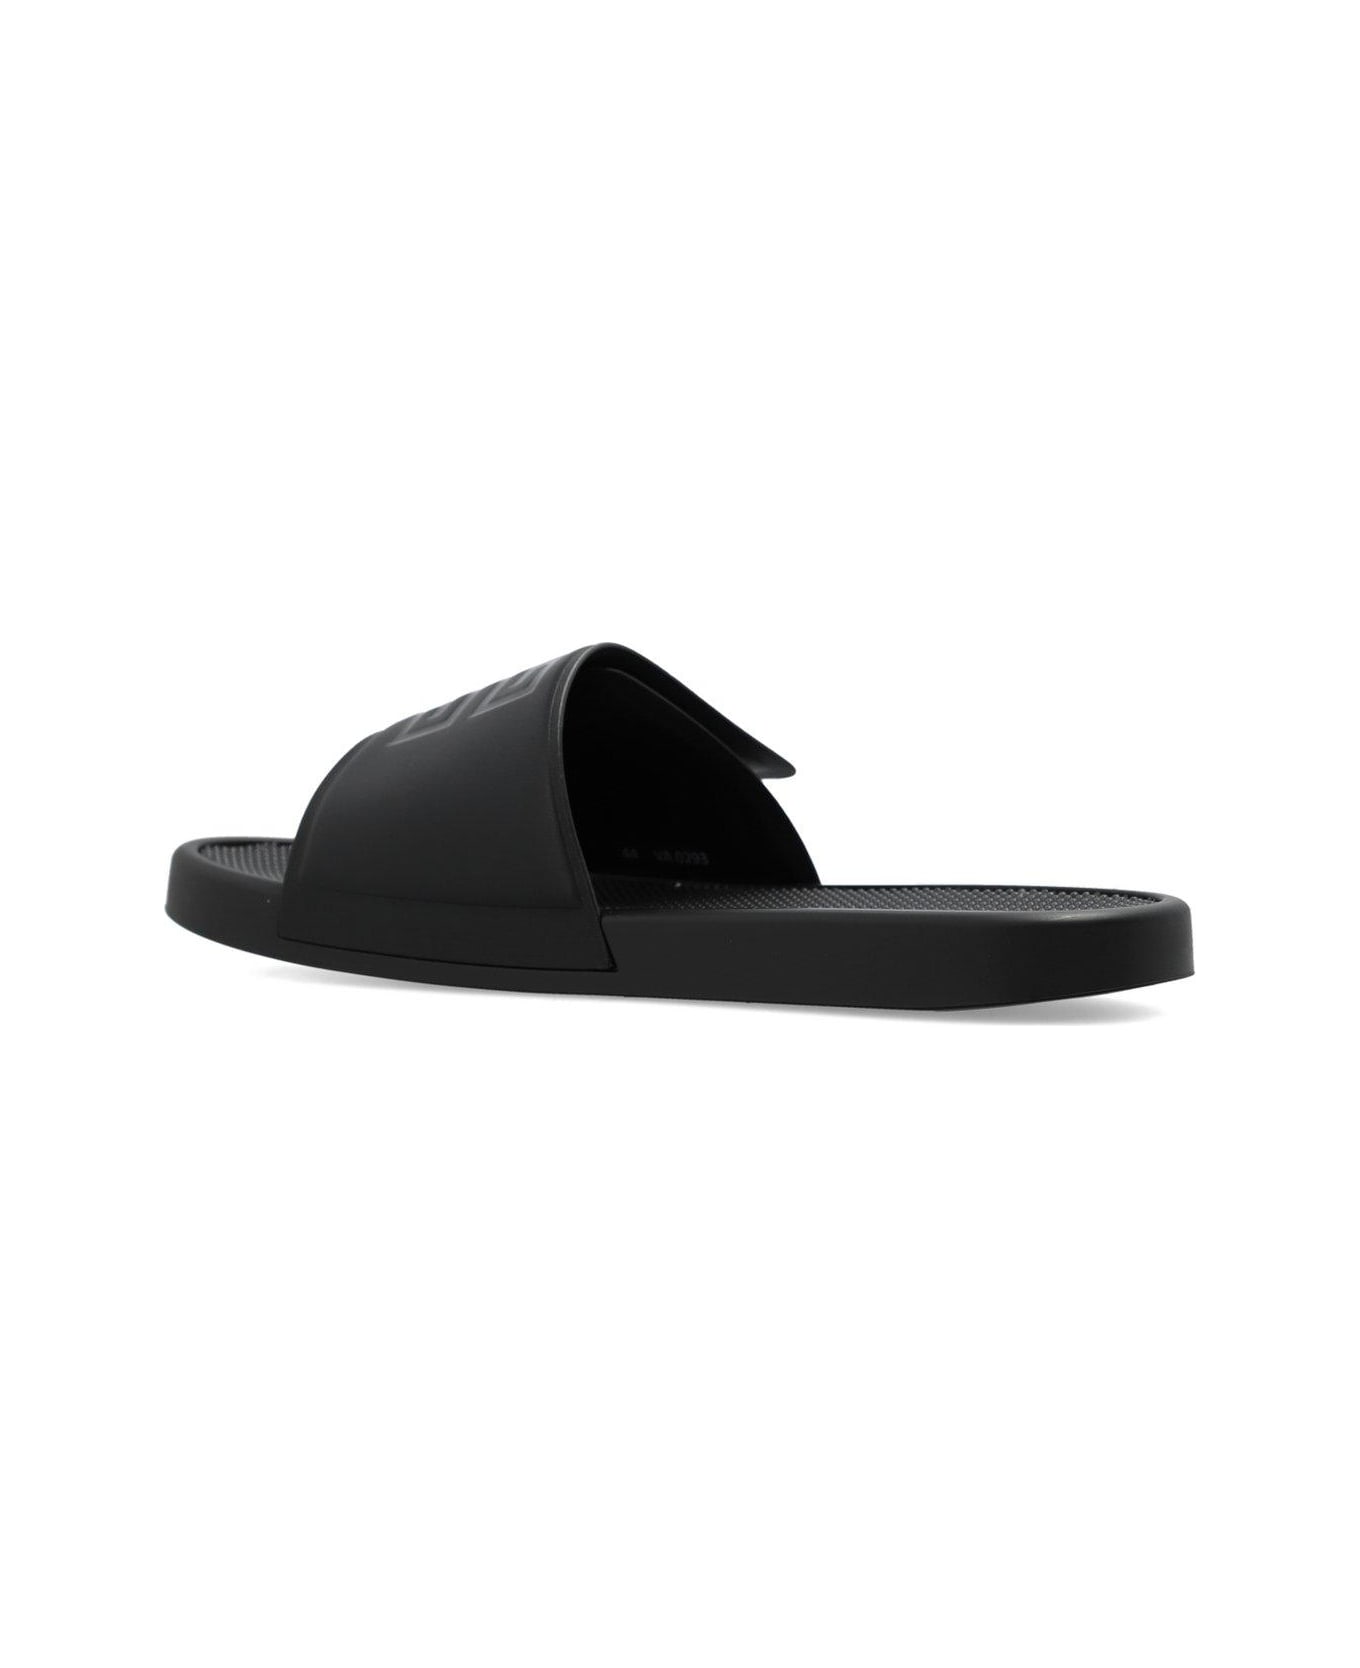 Givenchy 4g Emblem Flat Sandals - Black/white